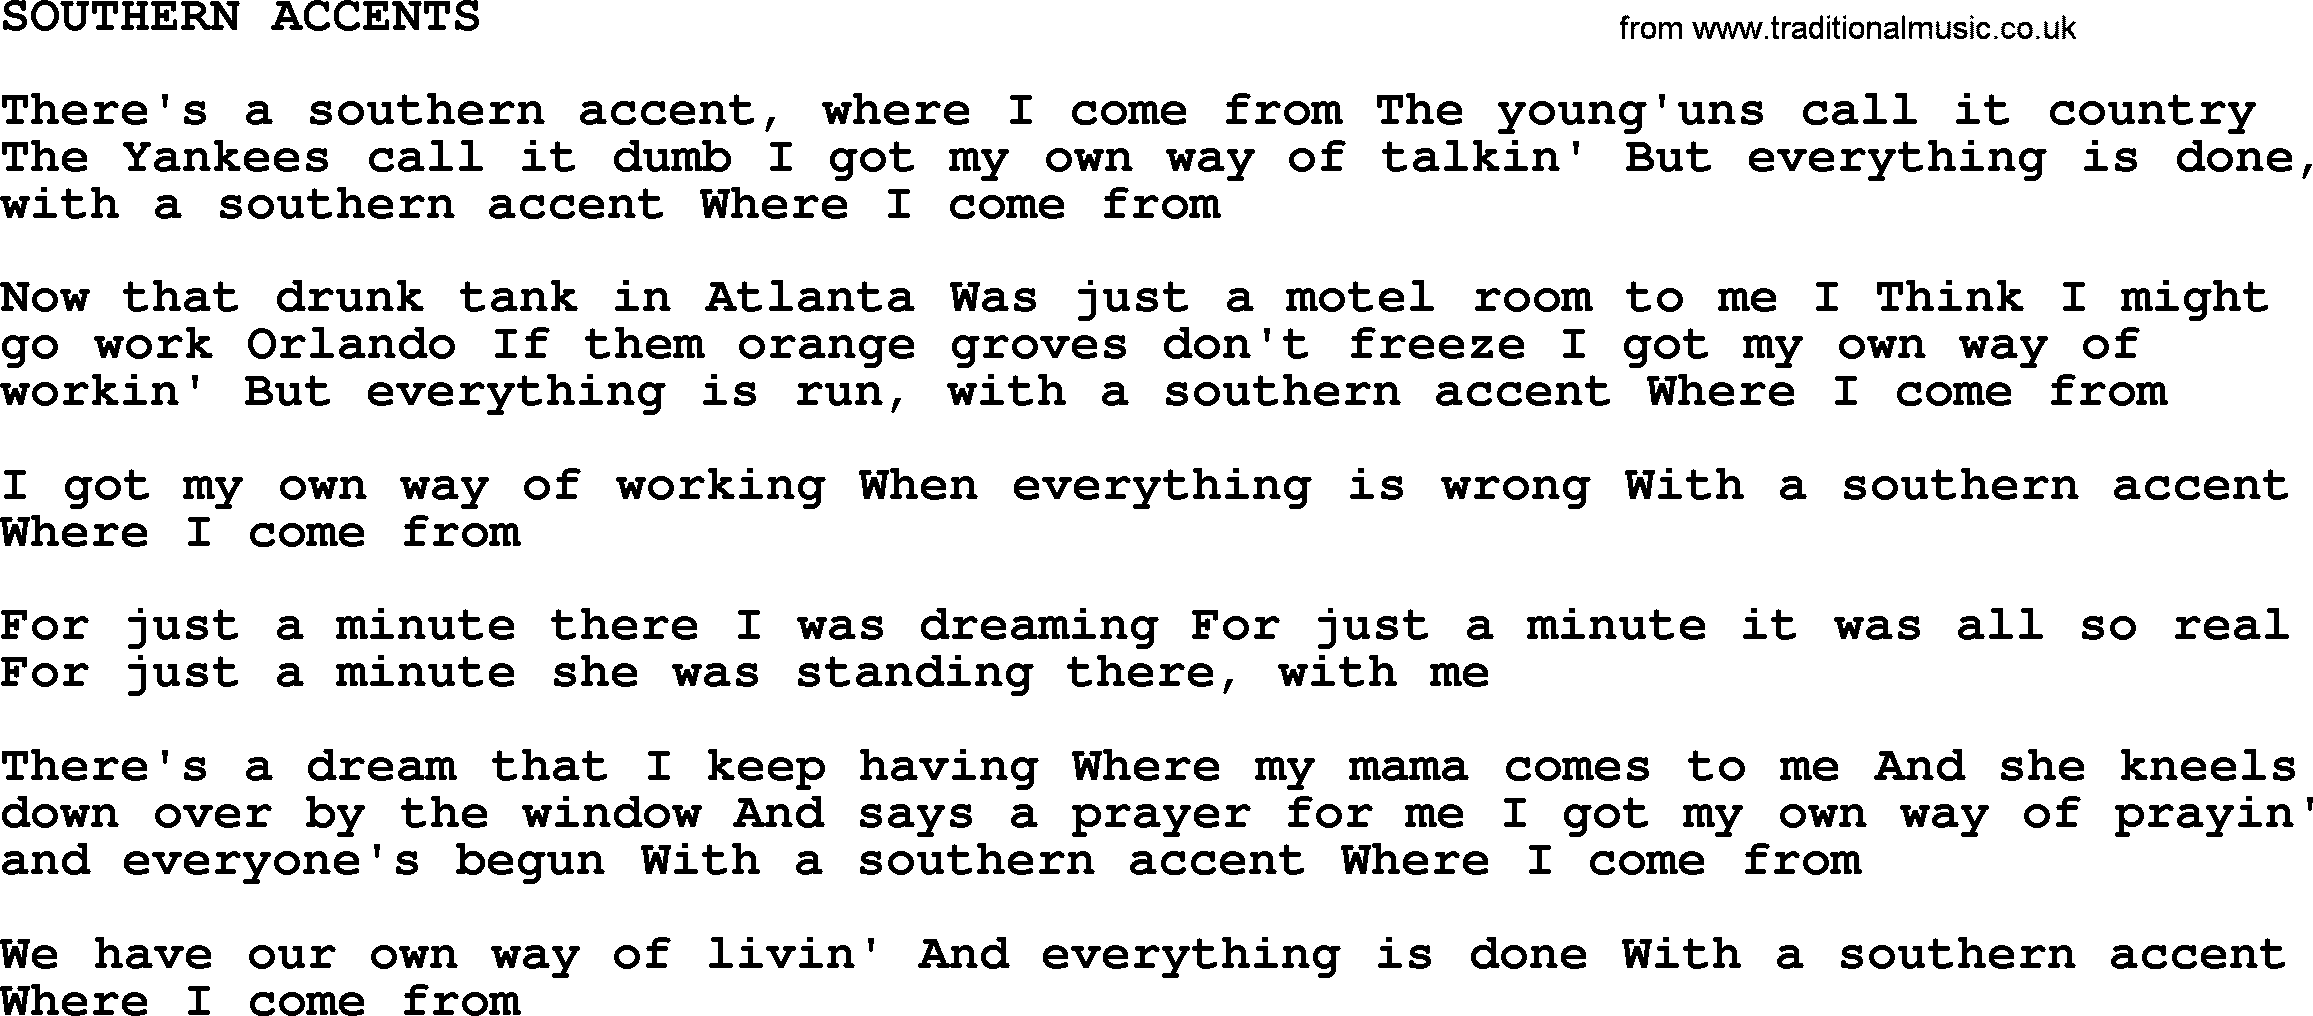 Johnny Cash song Southern Accents.txt lyrics